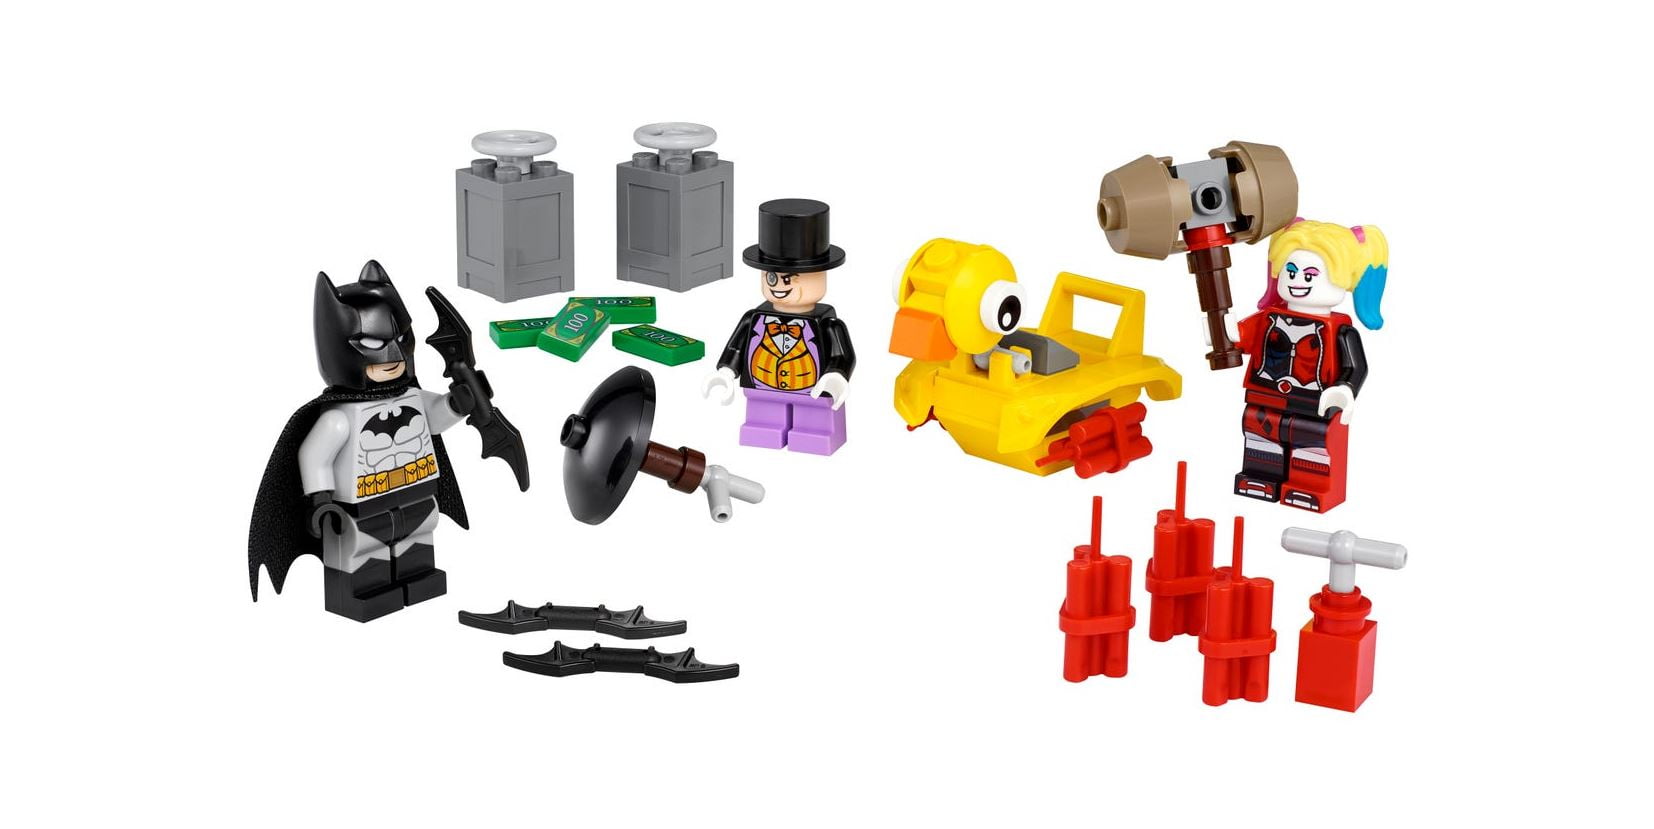 DICK GRAYSON New LEGO MINIFIGURES BATMAN SERIES 1 HEAD X 1,PARTS 